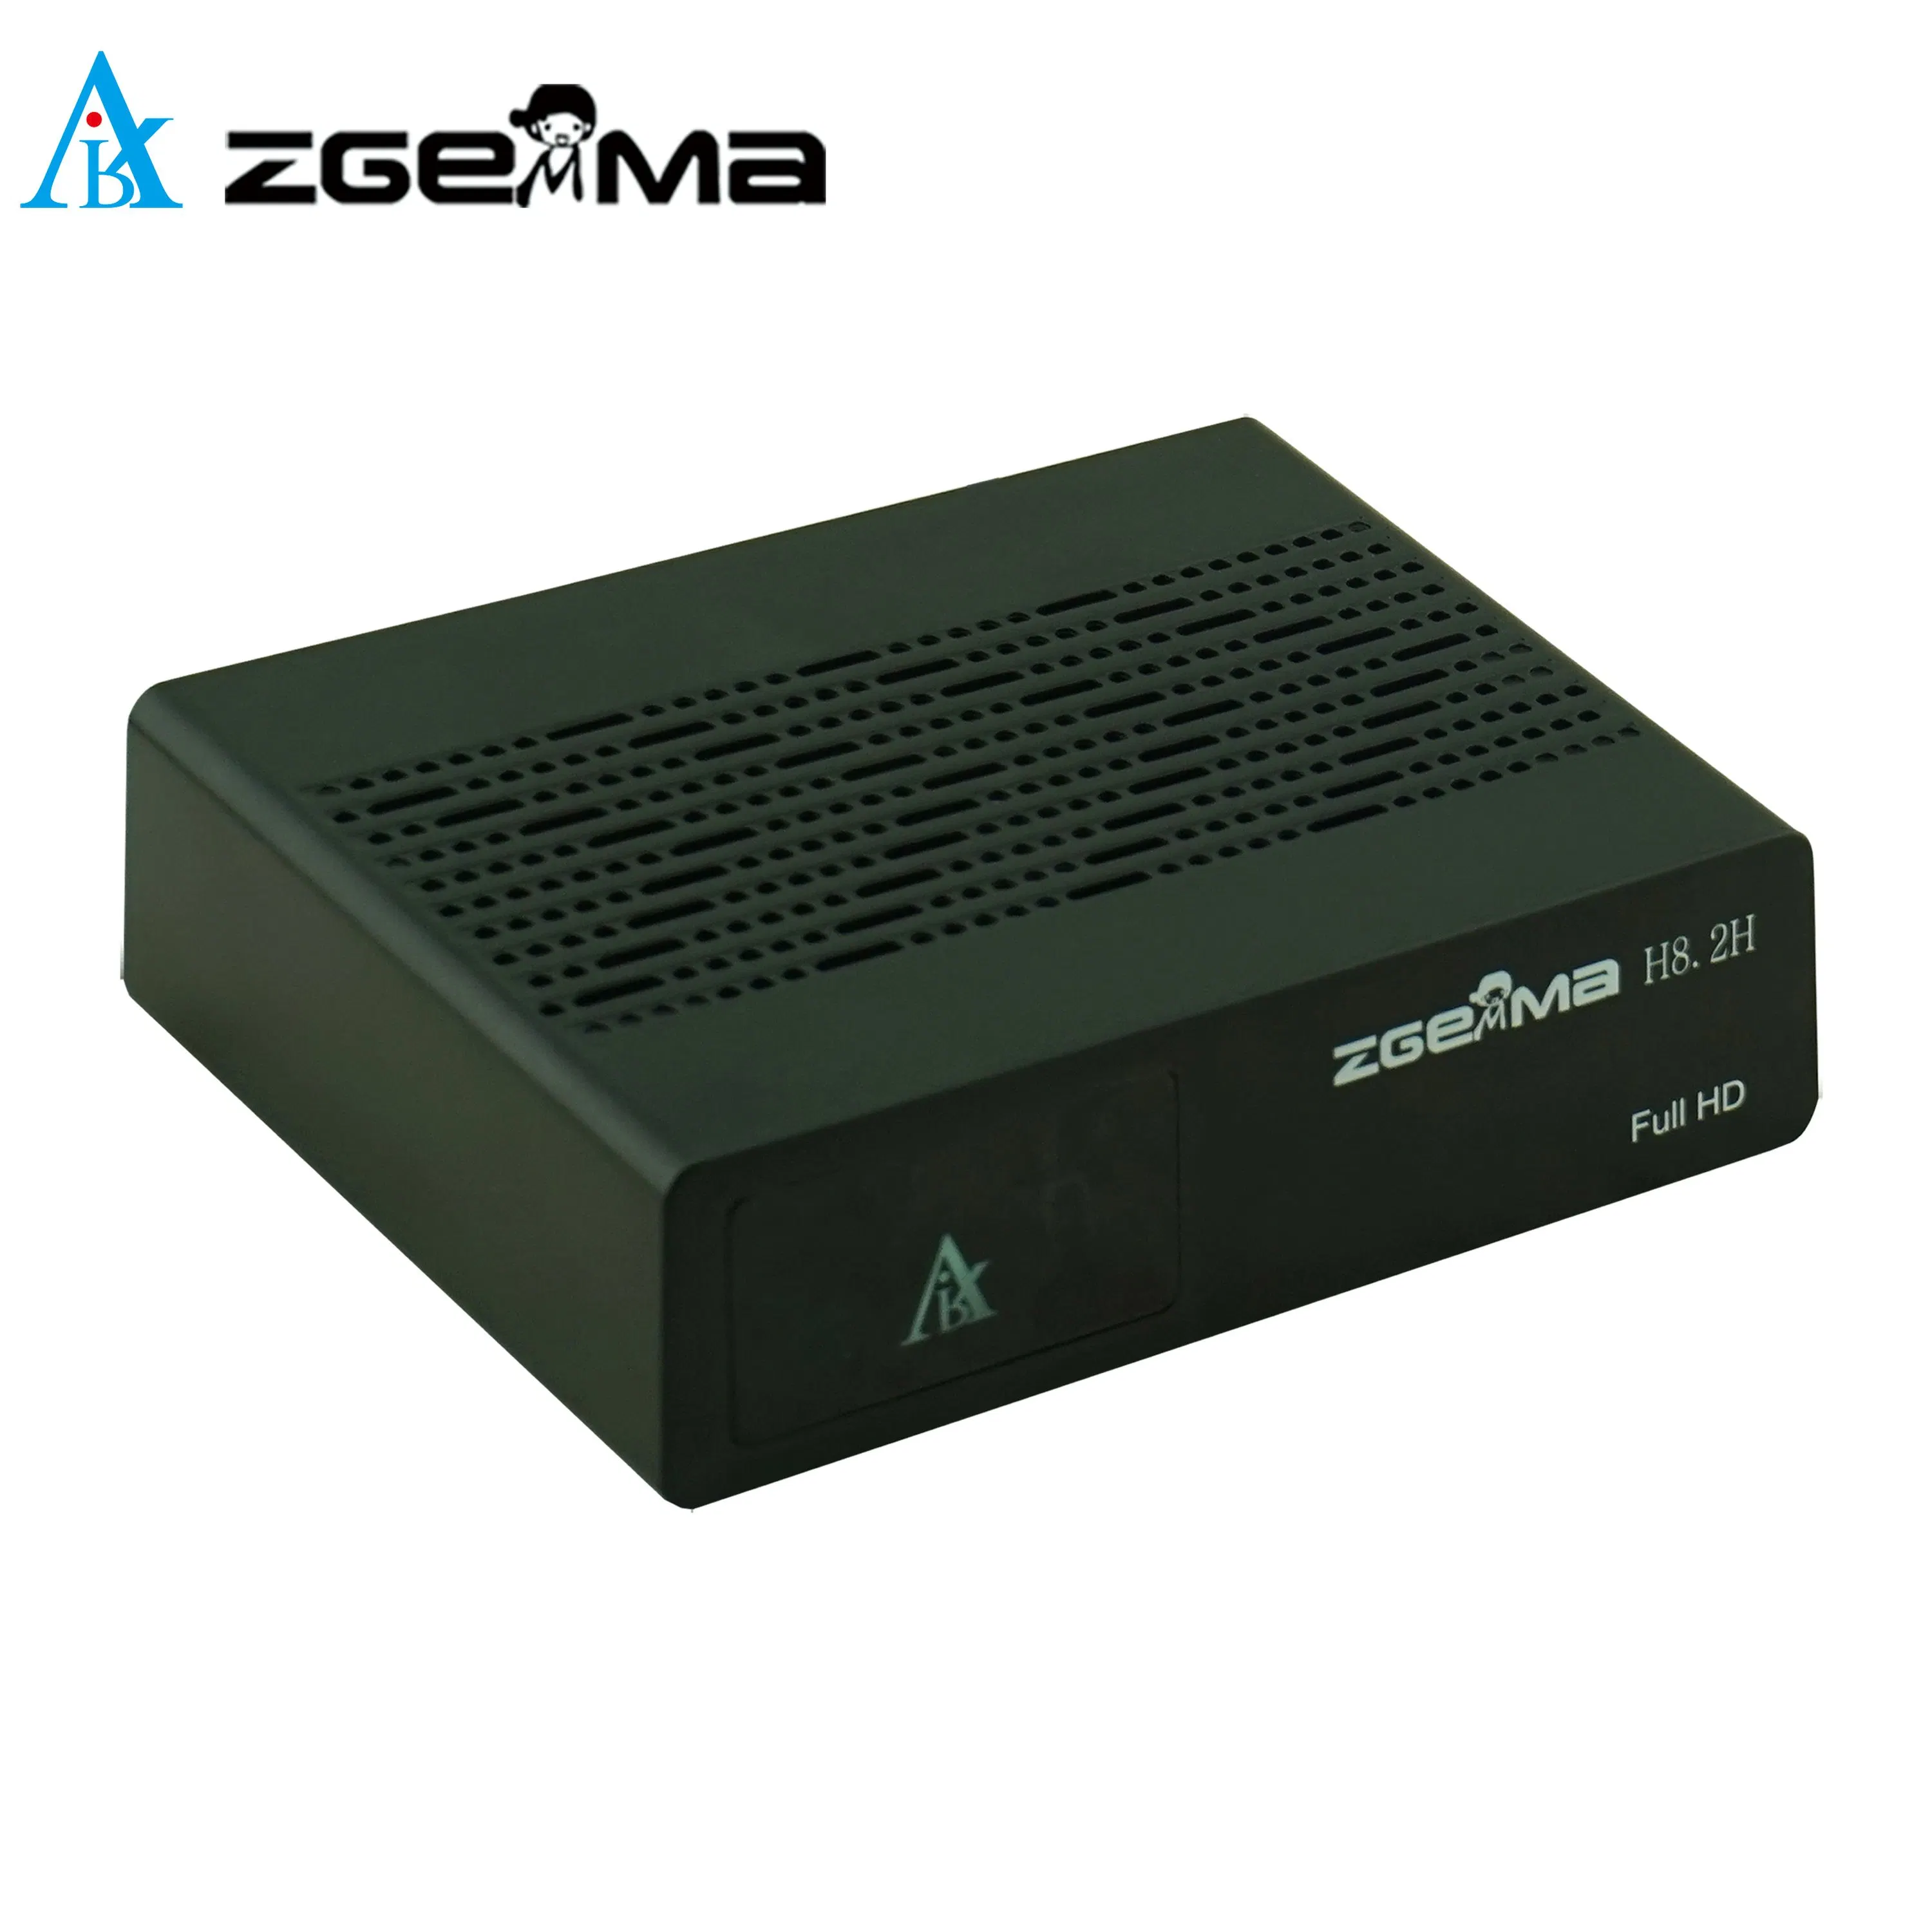 Zgemma H8.2h HD Satellite TV Receiver - Enigma2 Linux OS, DVB-S2X + DVB-T2/C Combo Tuner H. 265 Video Encoding TV Decoder